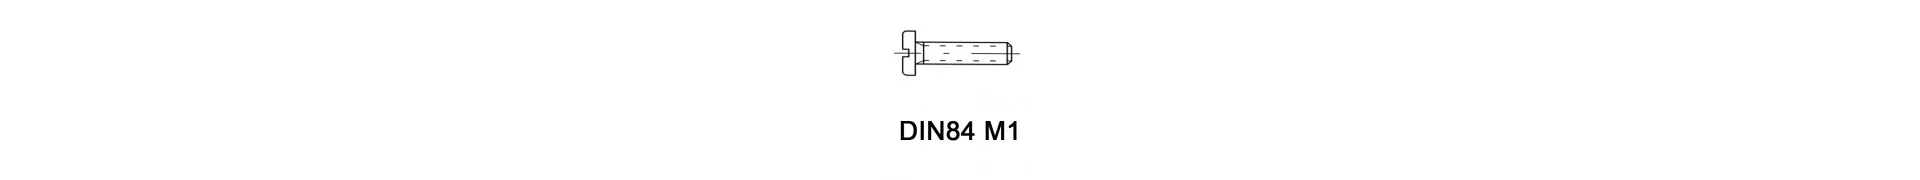 DIN84 M1